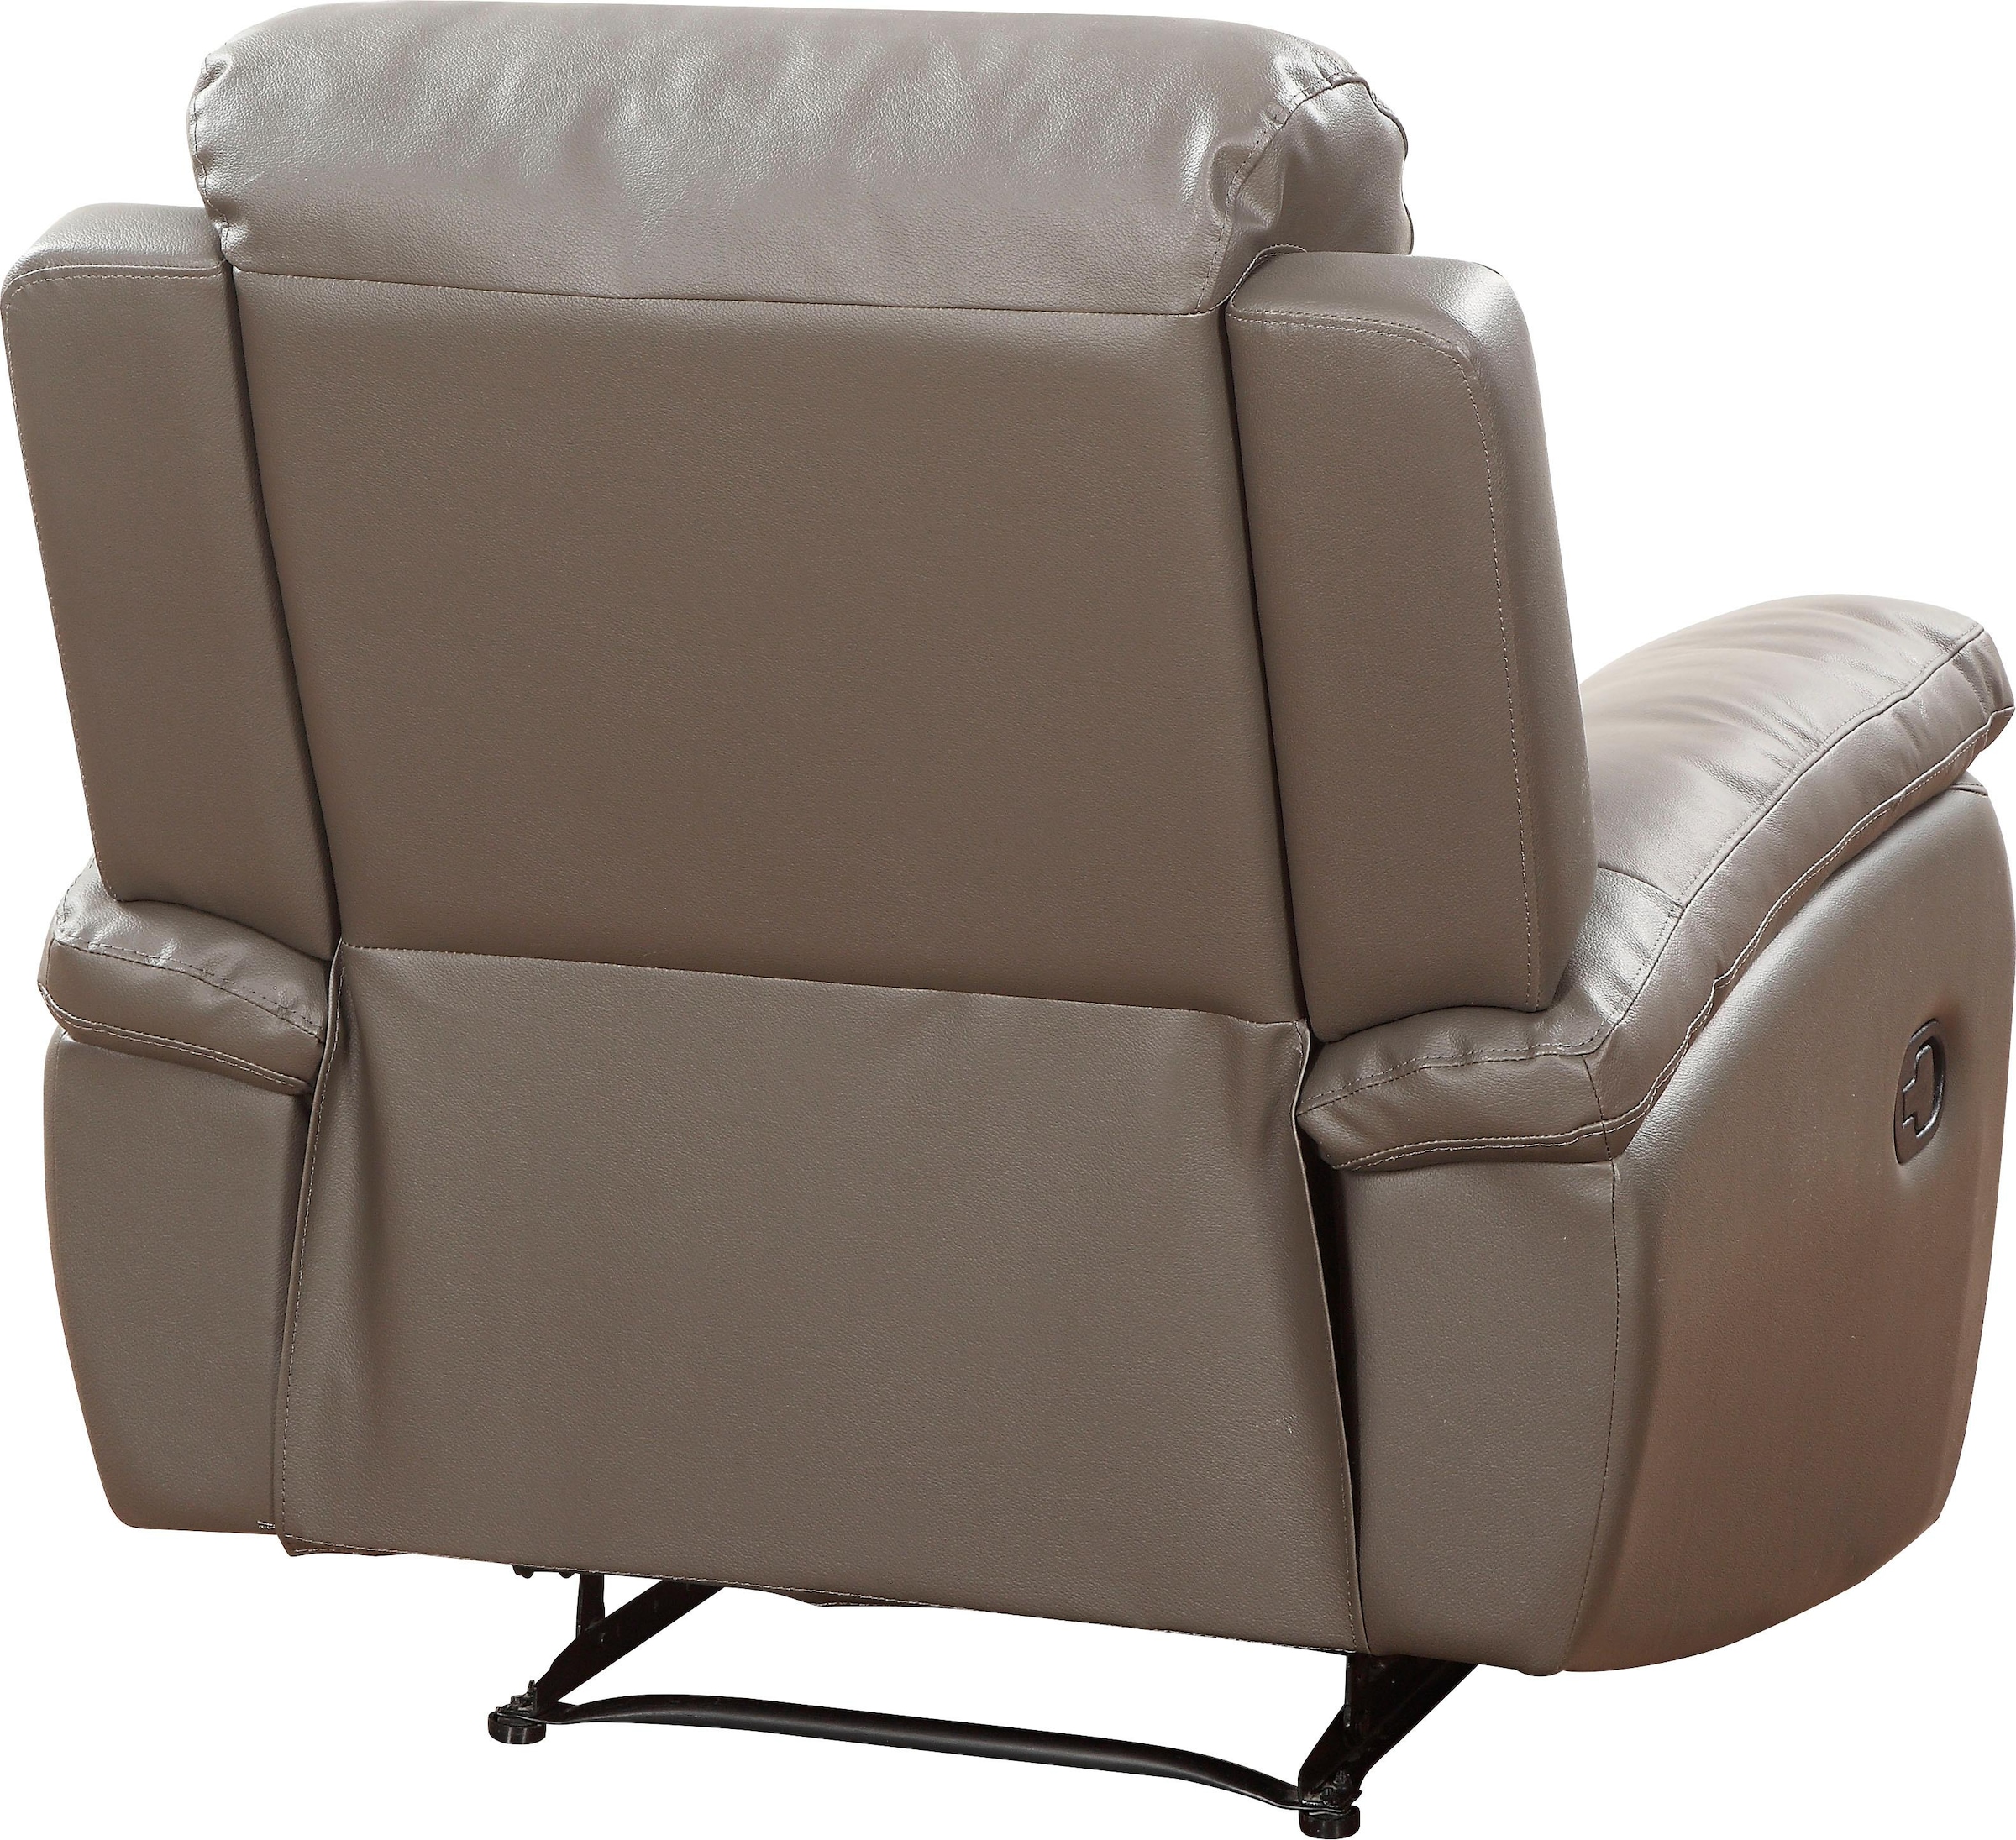 ATLANTIC home collection Sessel »Lion«, mit Relaxfunktion und Federkern, mit Lederbezug